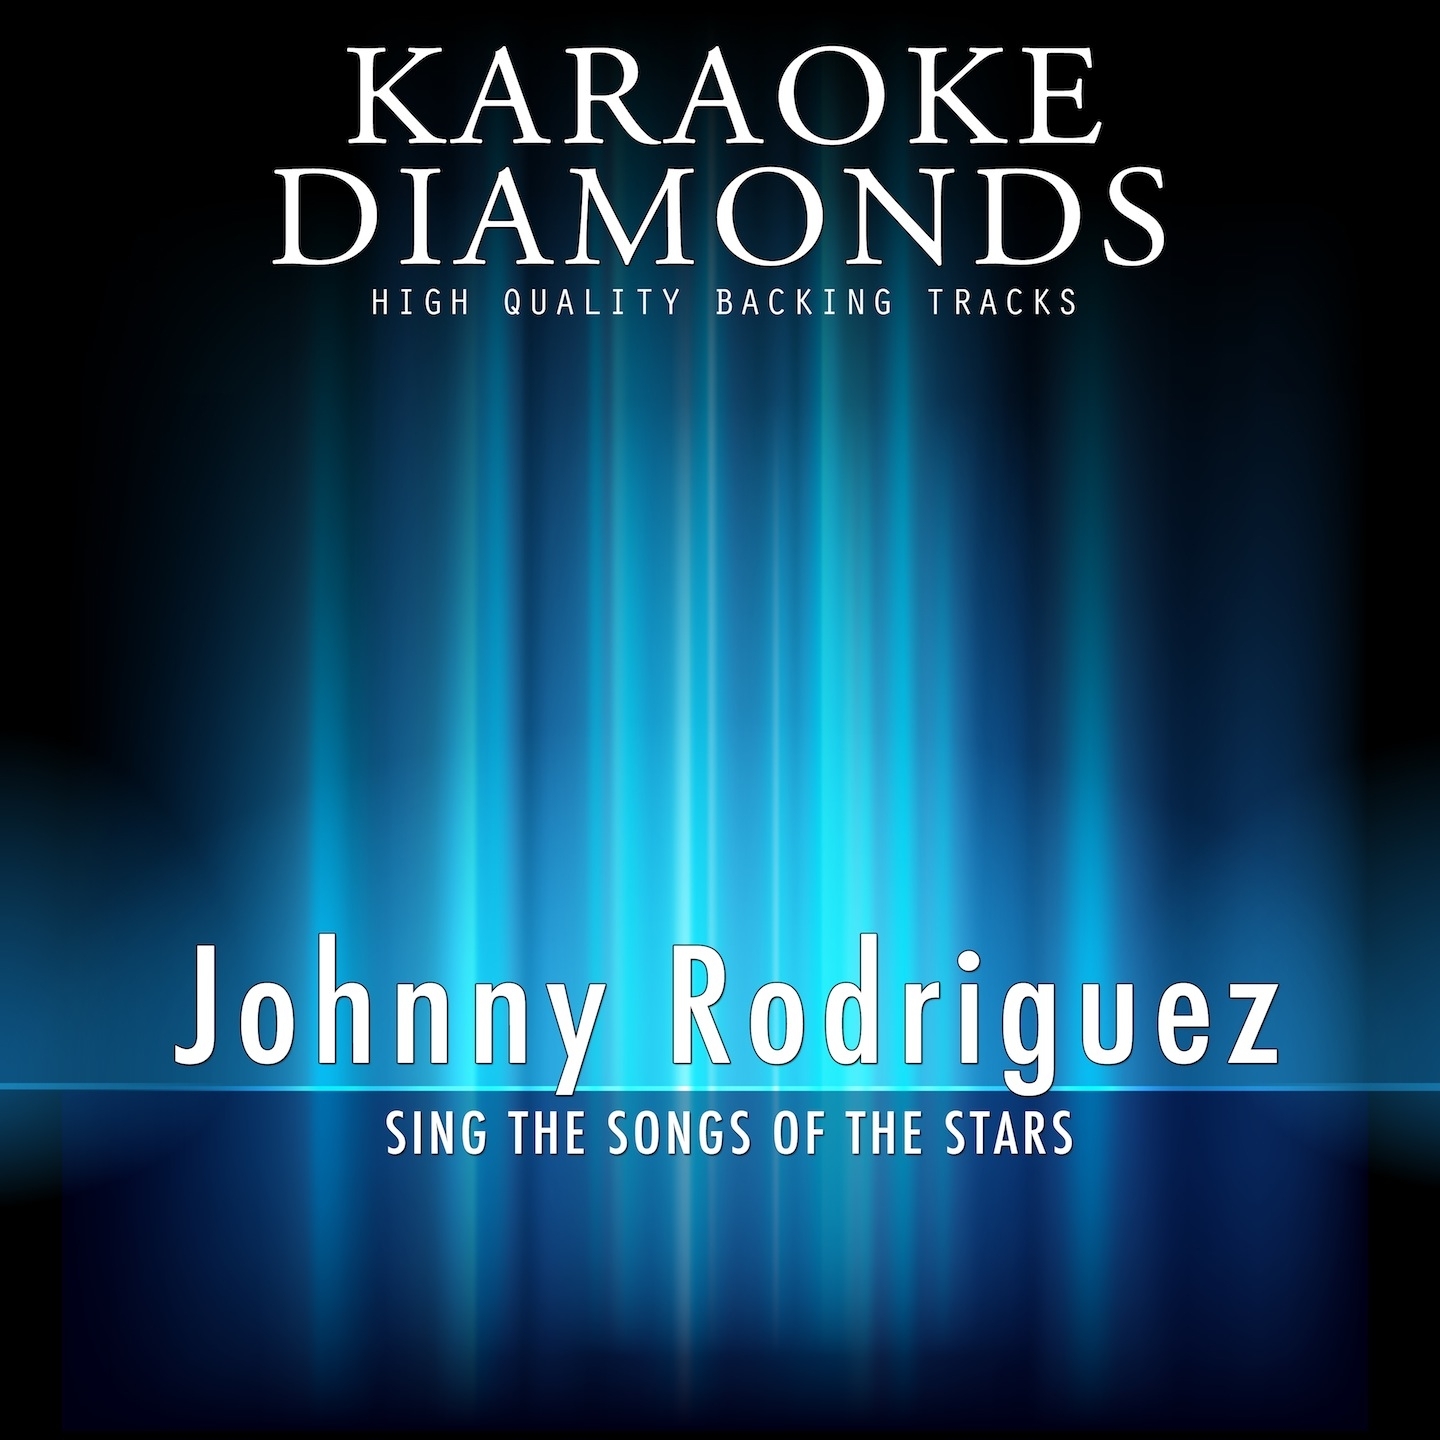 I Wonder If I Ever Said Goodbye (Karaoke Version In the Style of Johnny Rodriguez, Take 2)